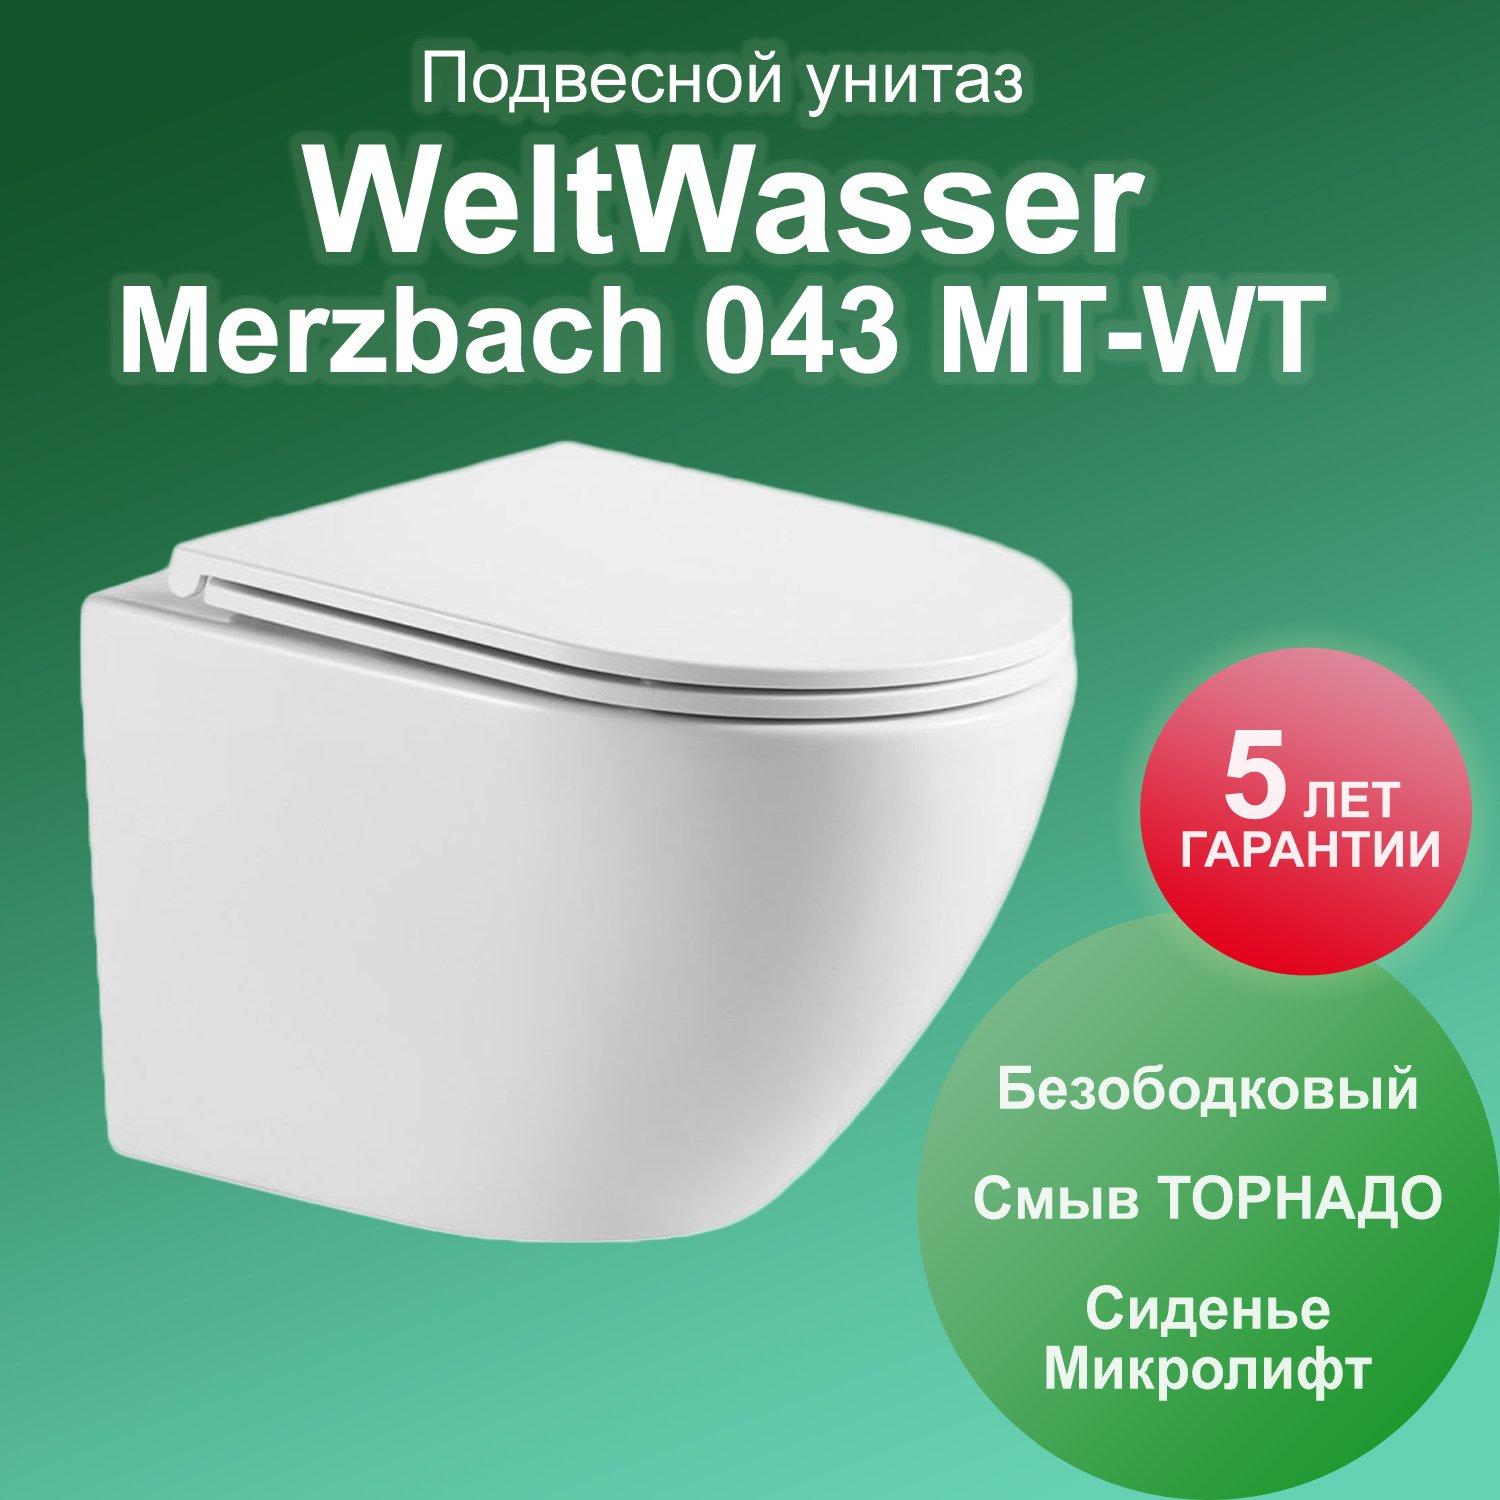 Комплект Weltwasser 10000011425 унитаза Merzbach 043 MT-WT с сиденьем микролифт и инсталляции Amberg 506 ST с черной кнопкой Amberg RD-BL - фото 1